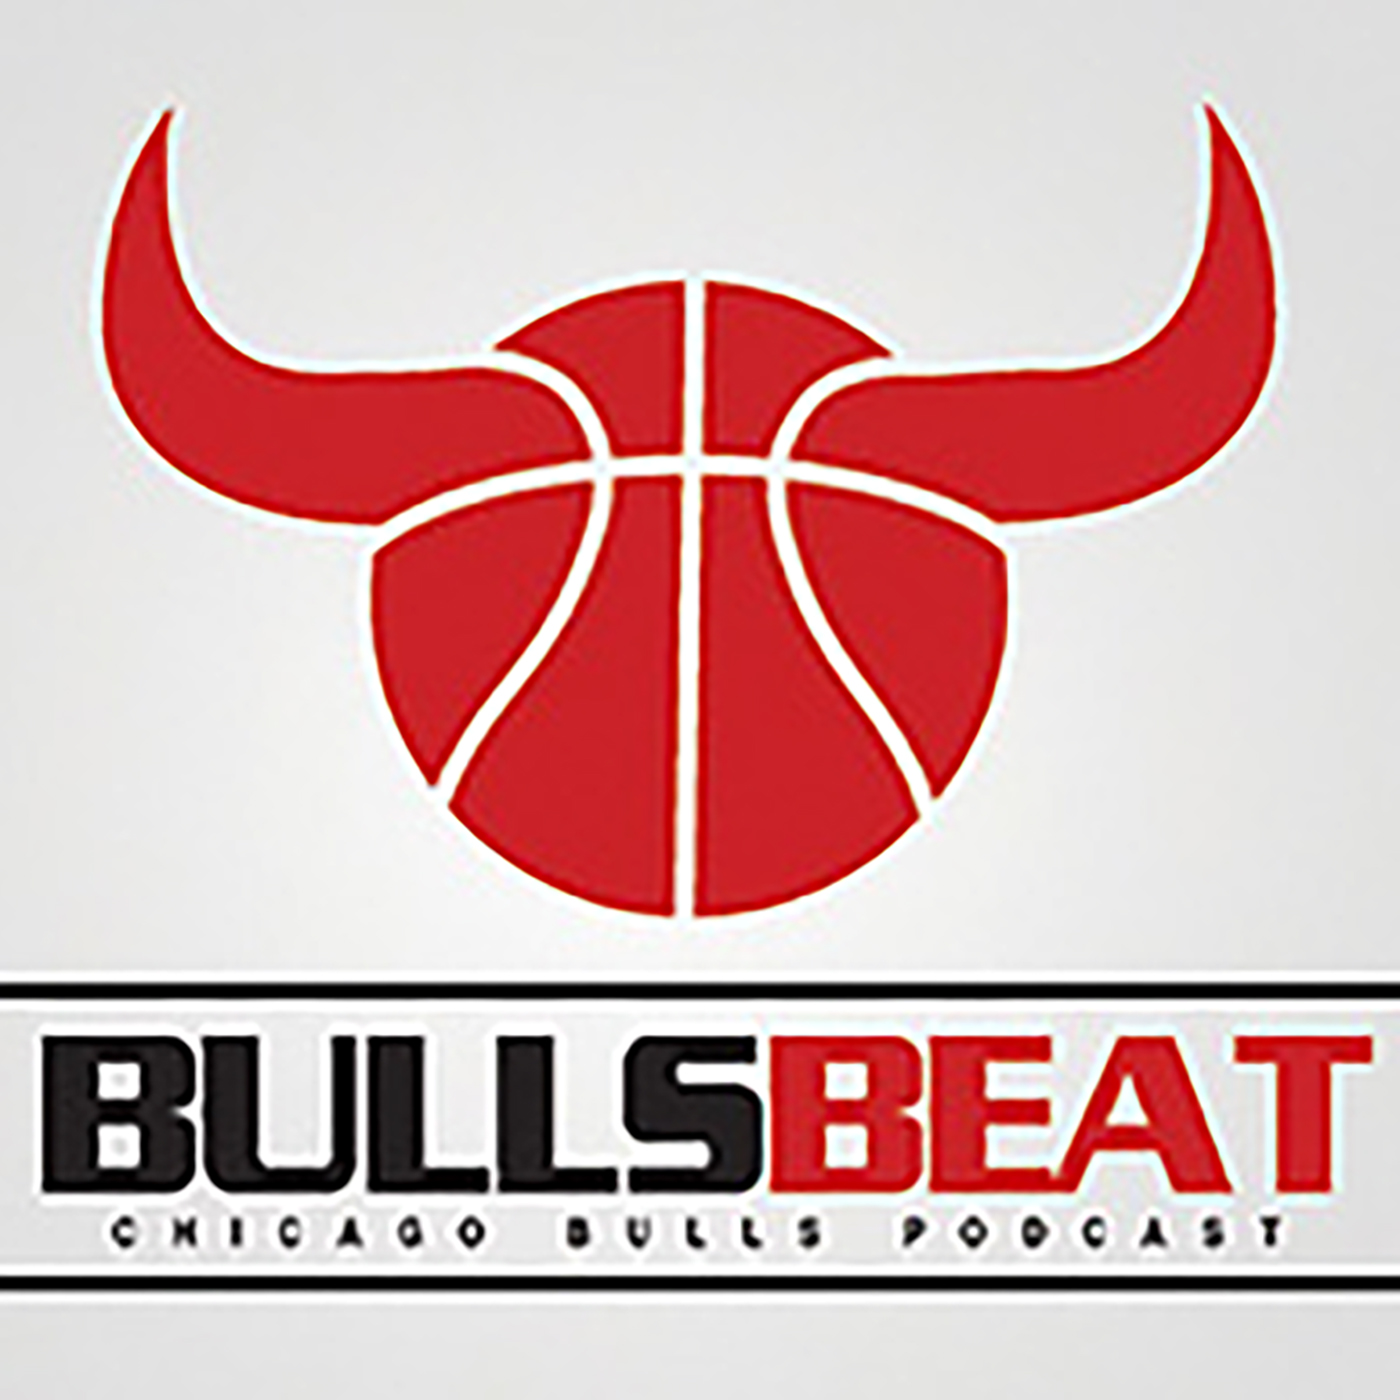 The Chicago Bulls Beat podcast